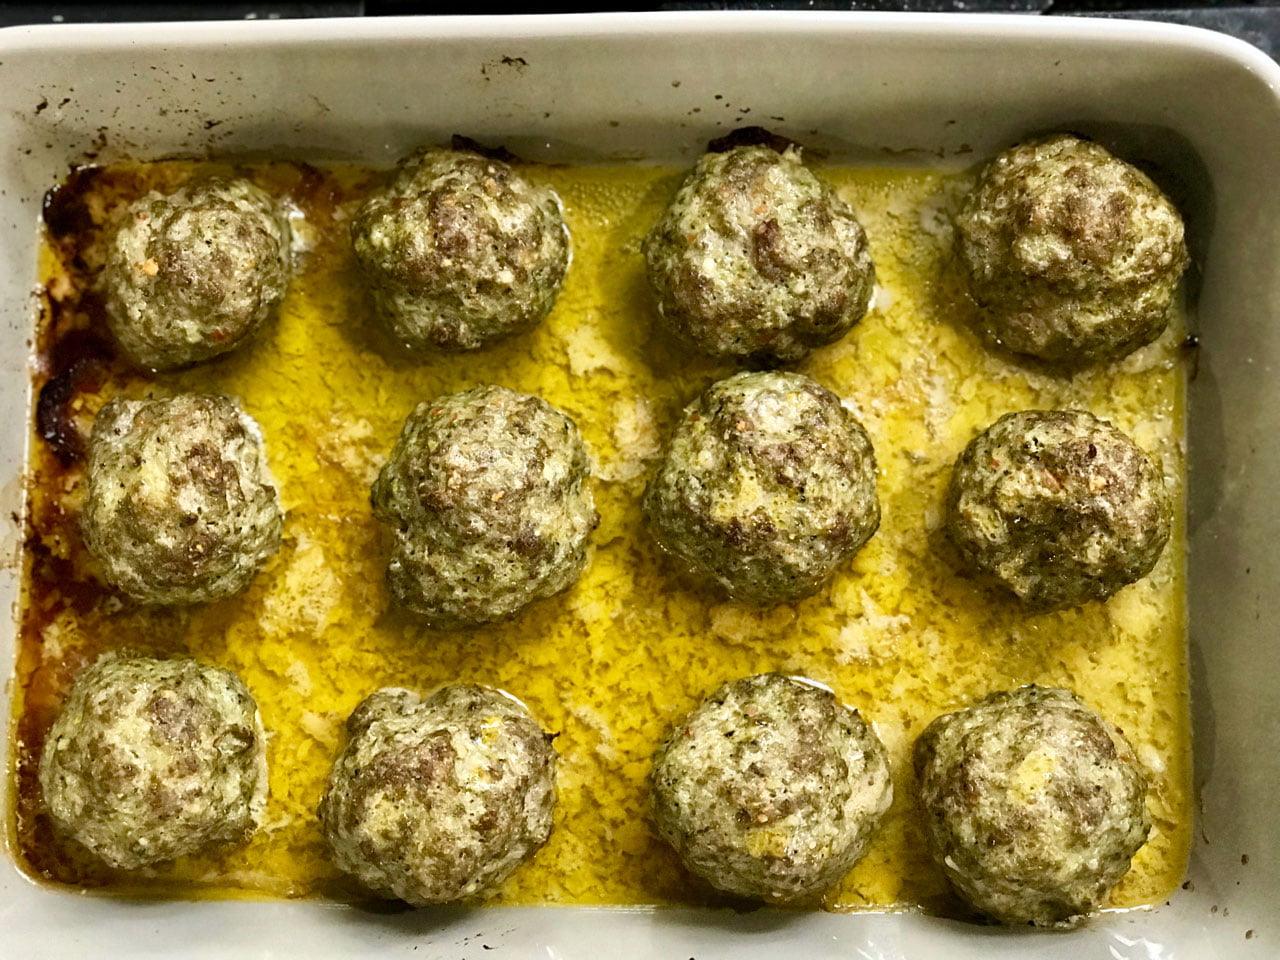 baked meatballs